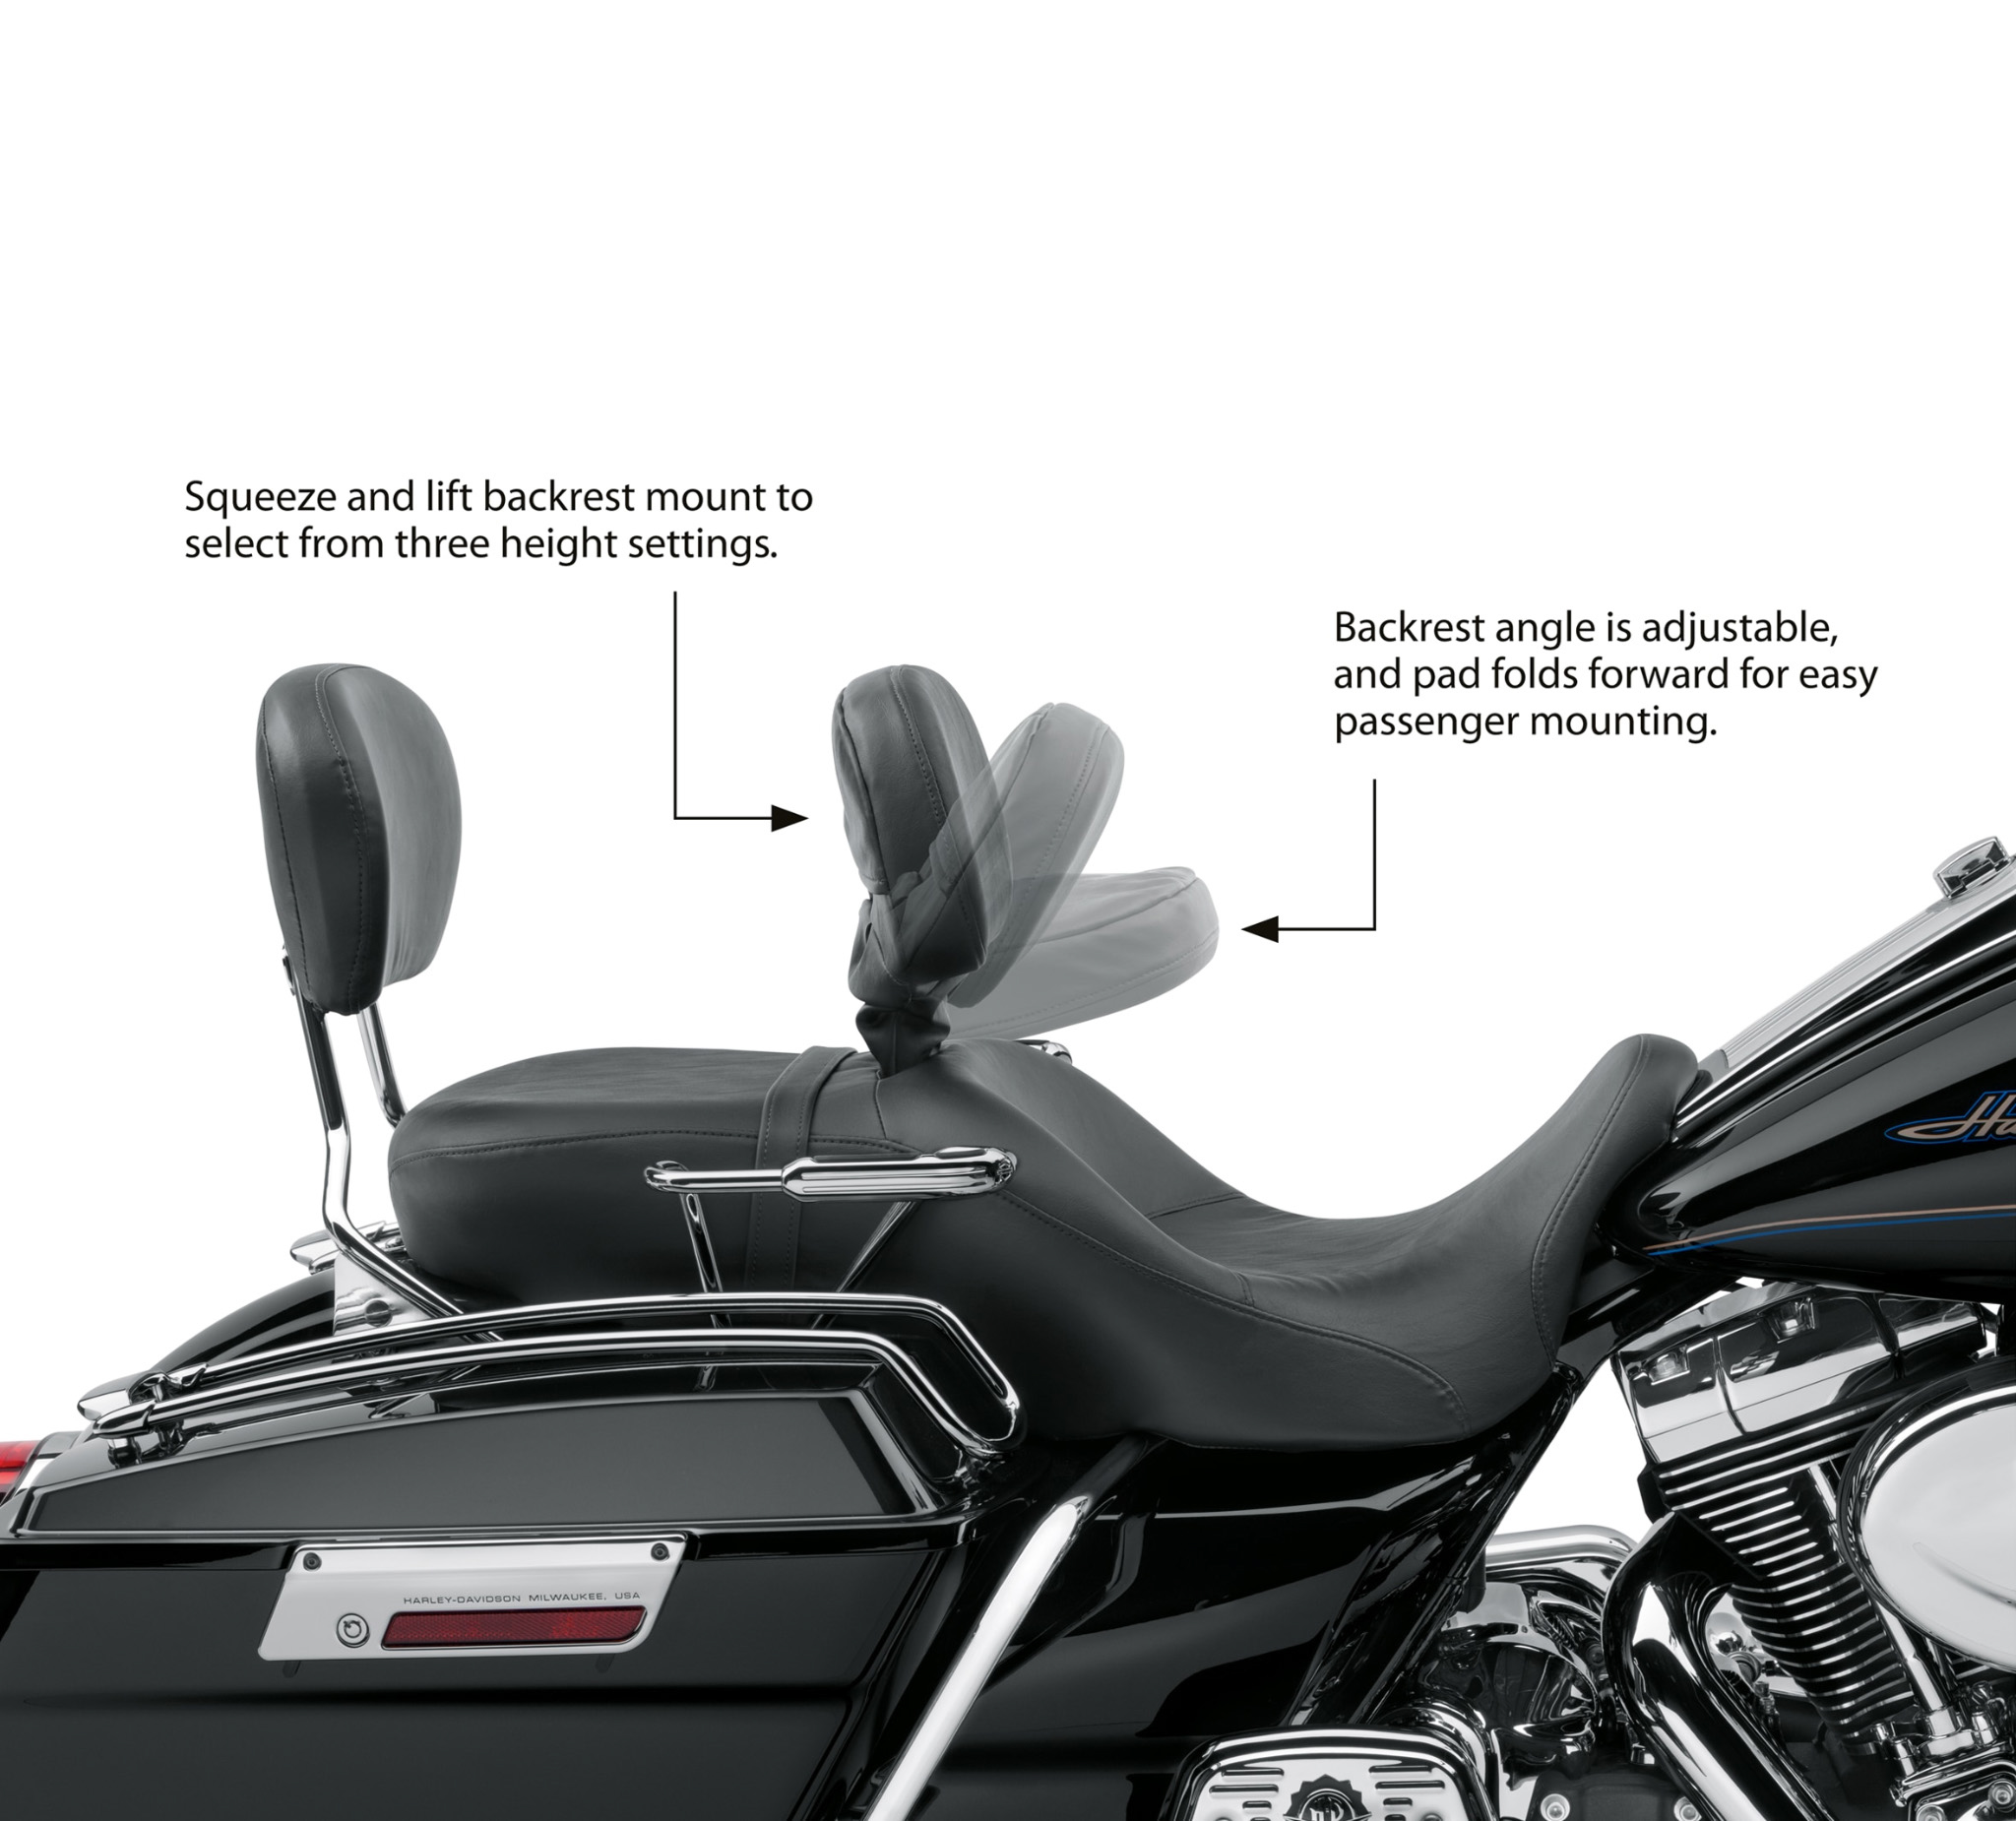 Share Adjustable Rider Backrest.tif?impolicy=myresizerw=700